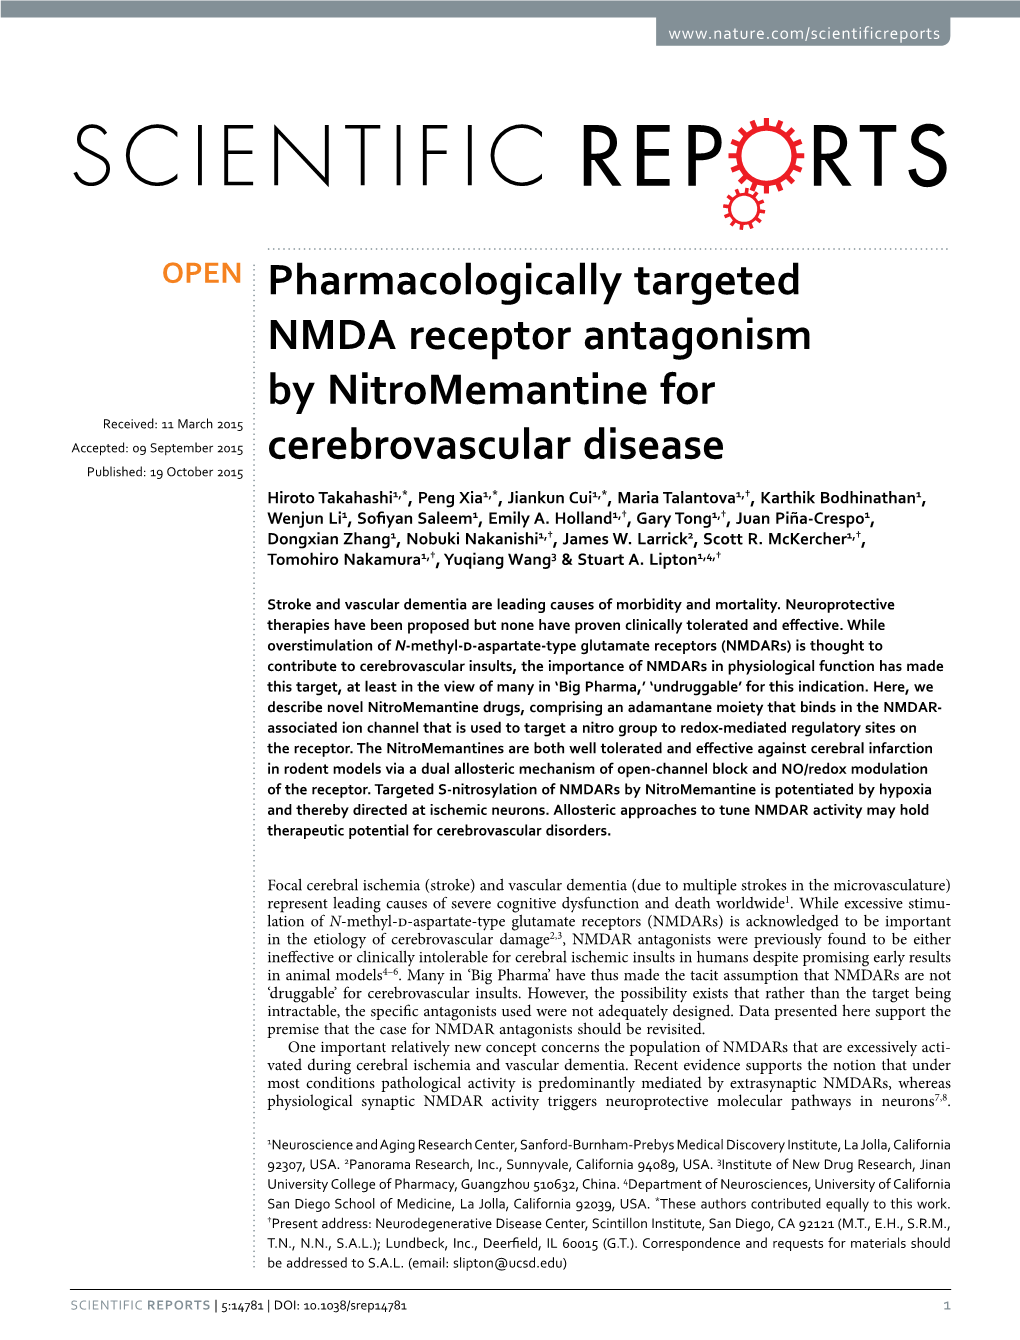 Pharmacologically Targeted NMDA Receptor